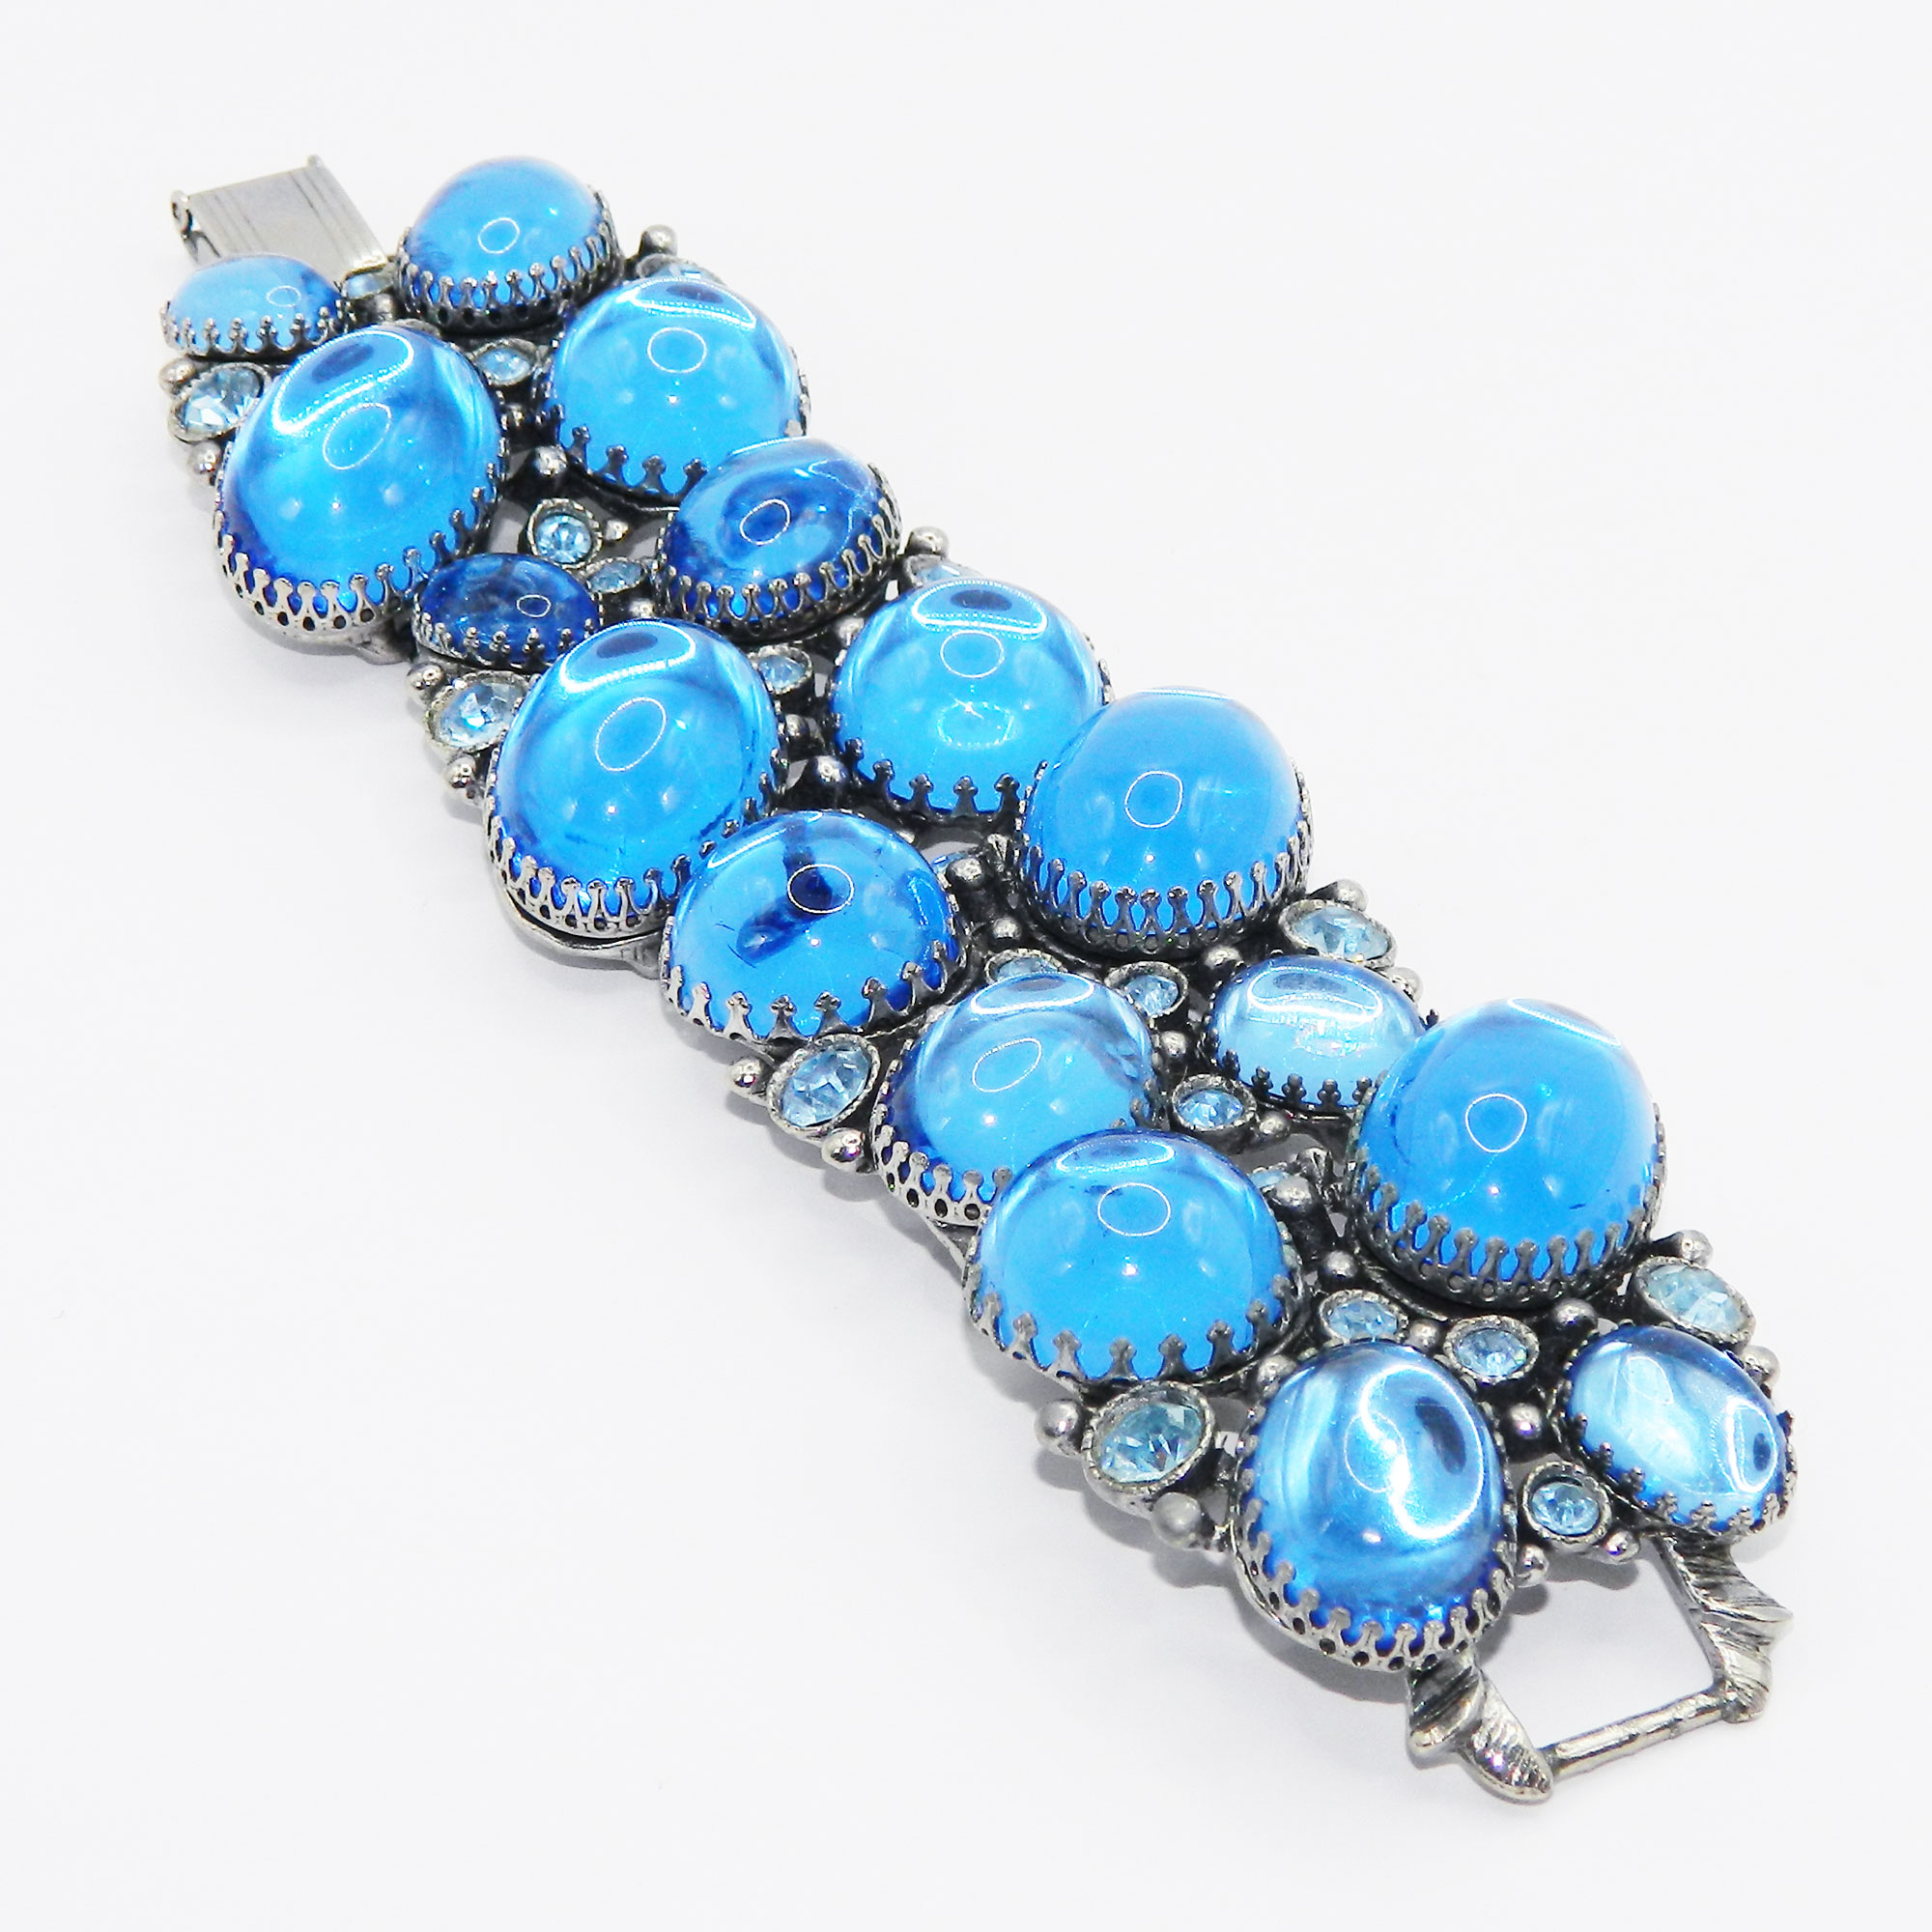 1950s Selro blue cabochon bracelet